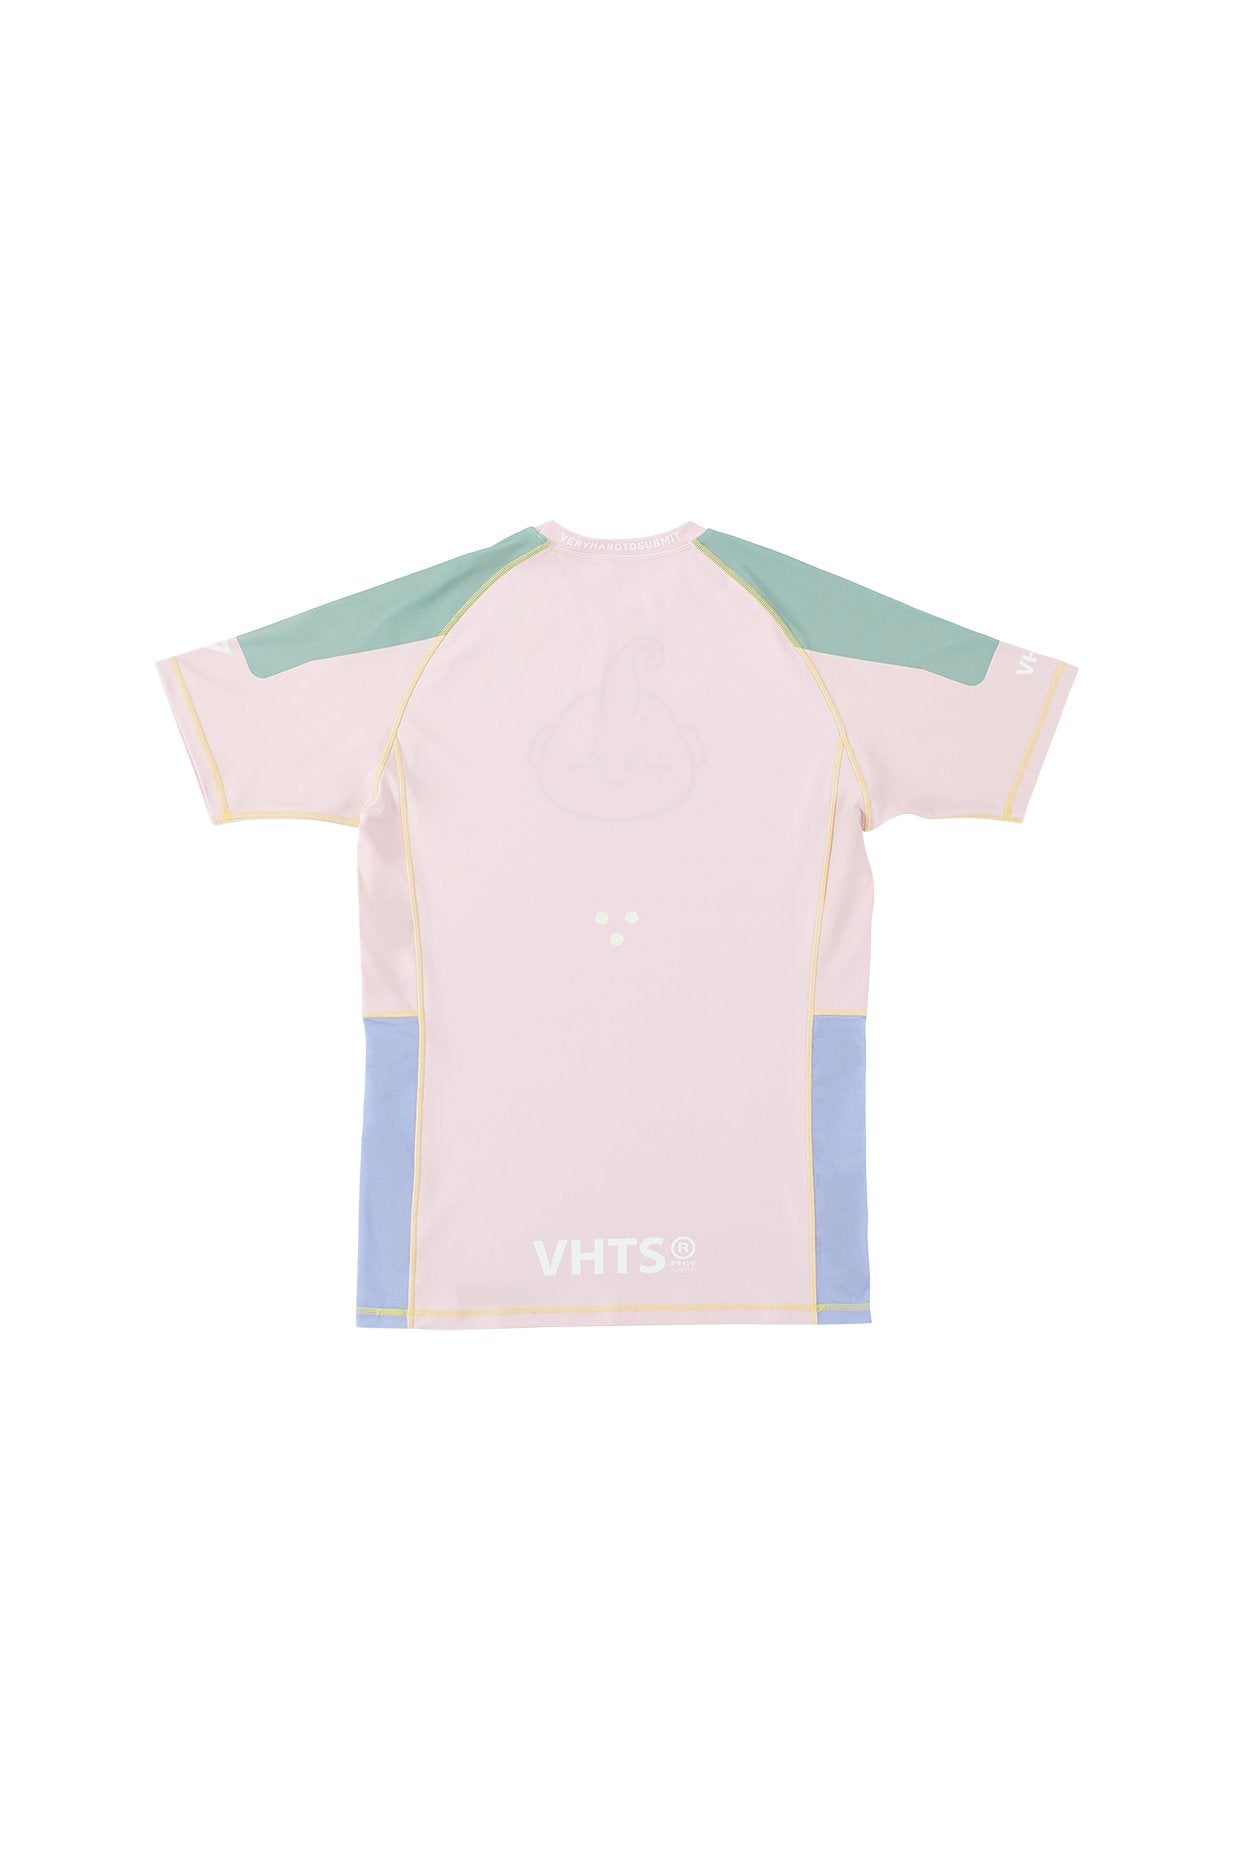 VHTS Spring/Summer 2023 Special Edition "Buu23" Short sleeves Rash guard